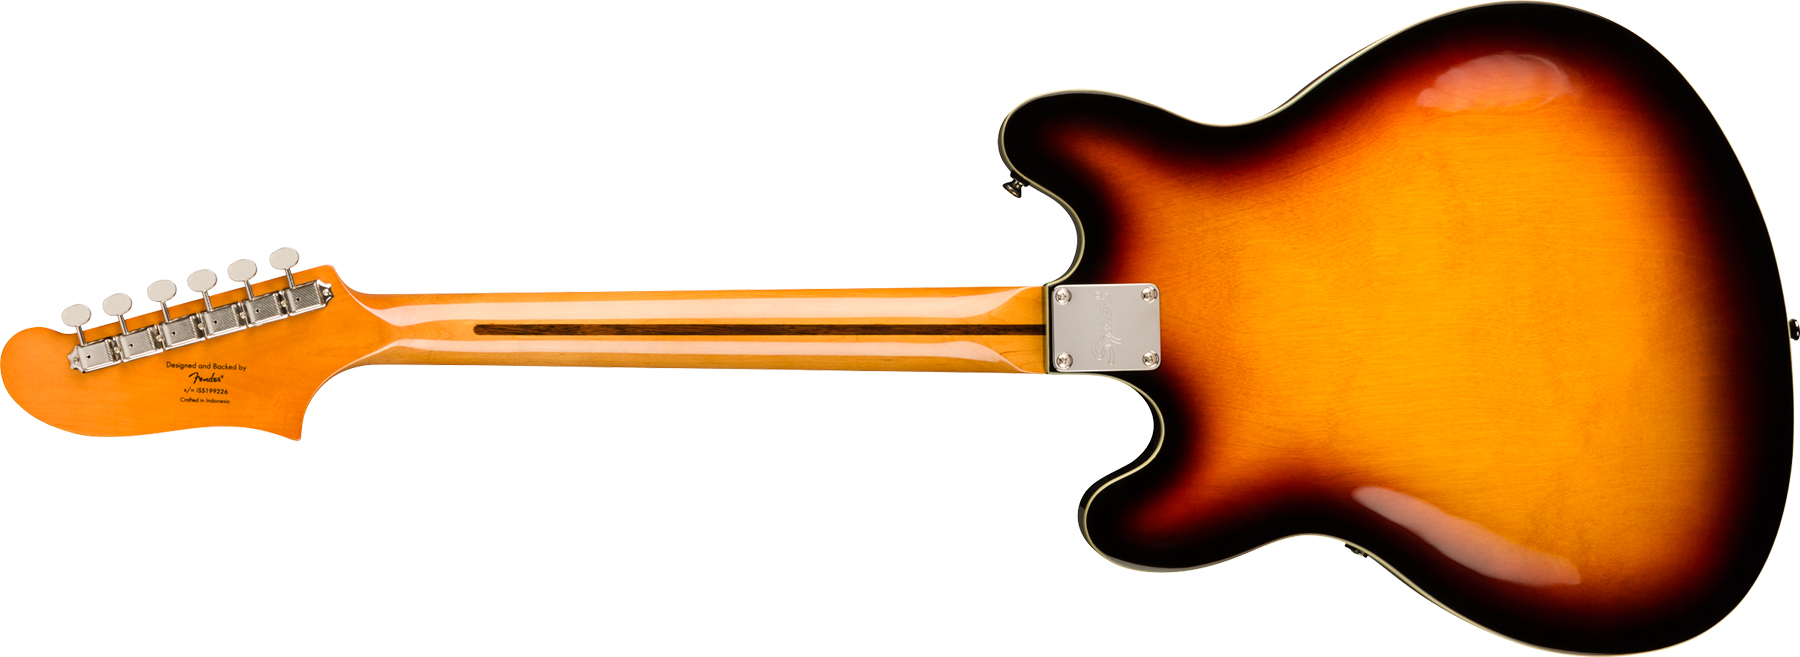 Squier Starcaster Classic Vibe 2019 Hh Ht Mn - 3-color Sunburst - Semi hollow elektriche gitaar - Variation 1